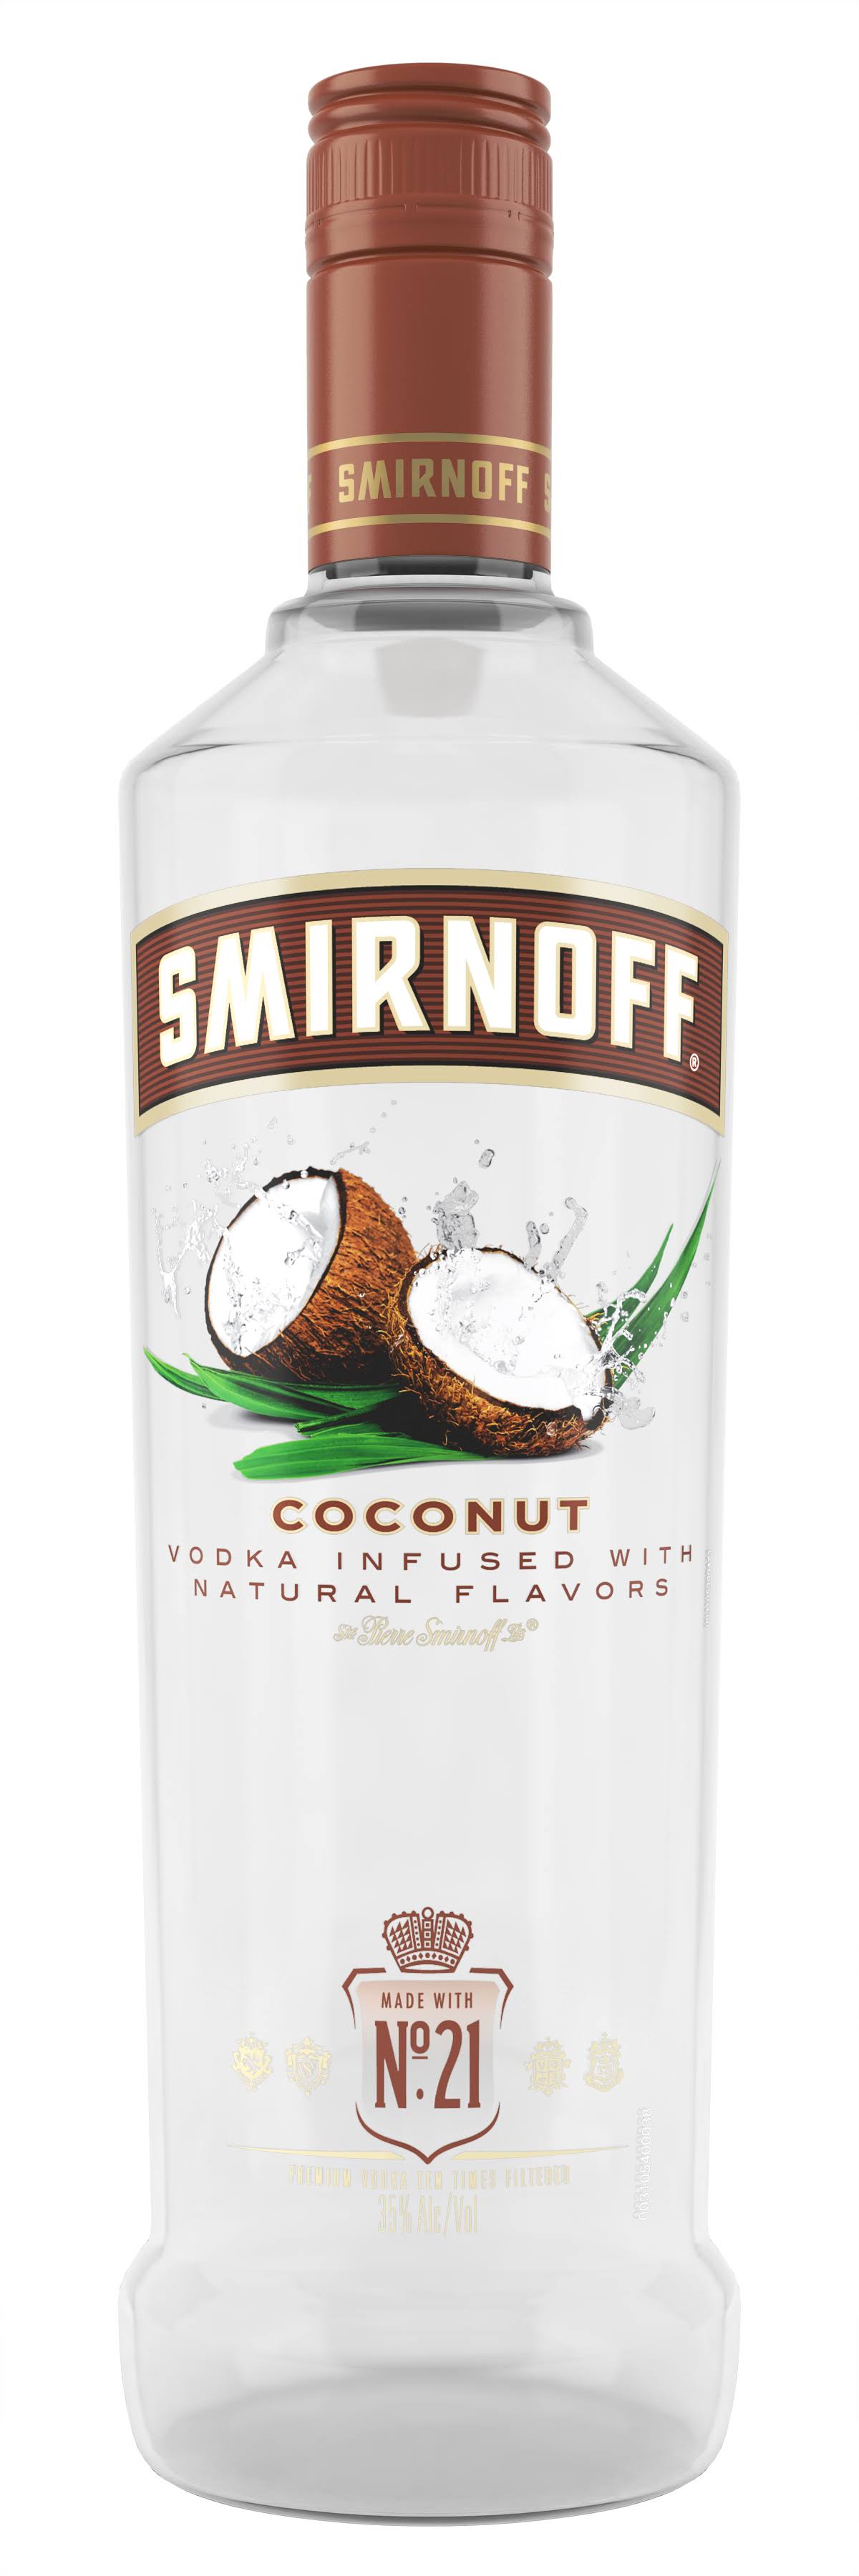 Smirnoff Vodka, Coconut - 750 ml